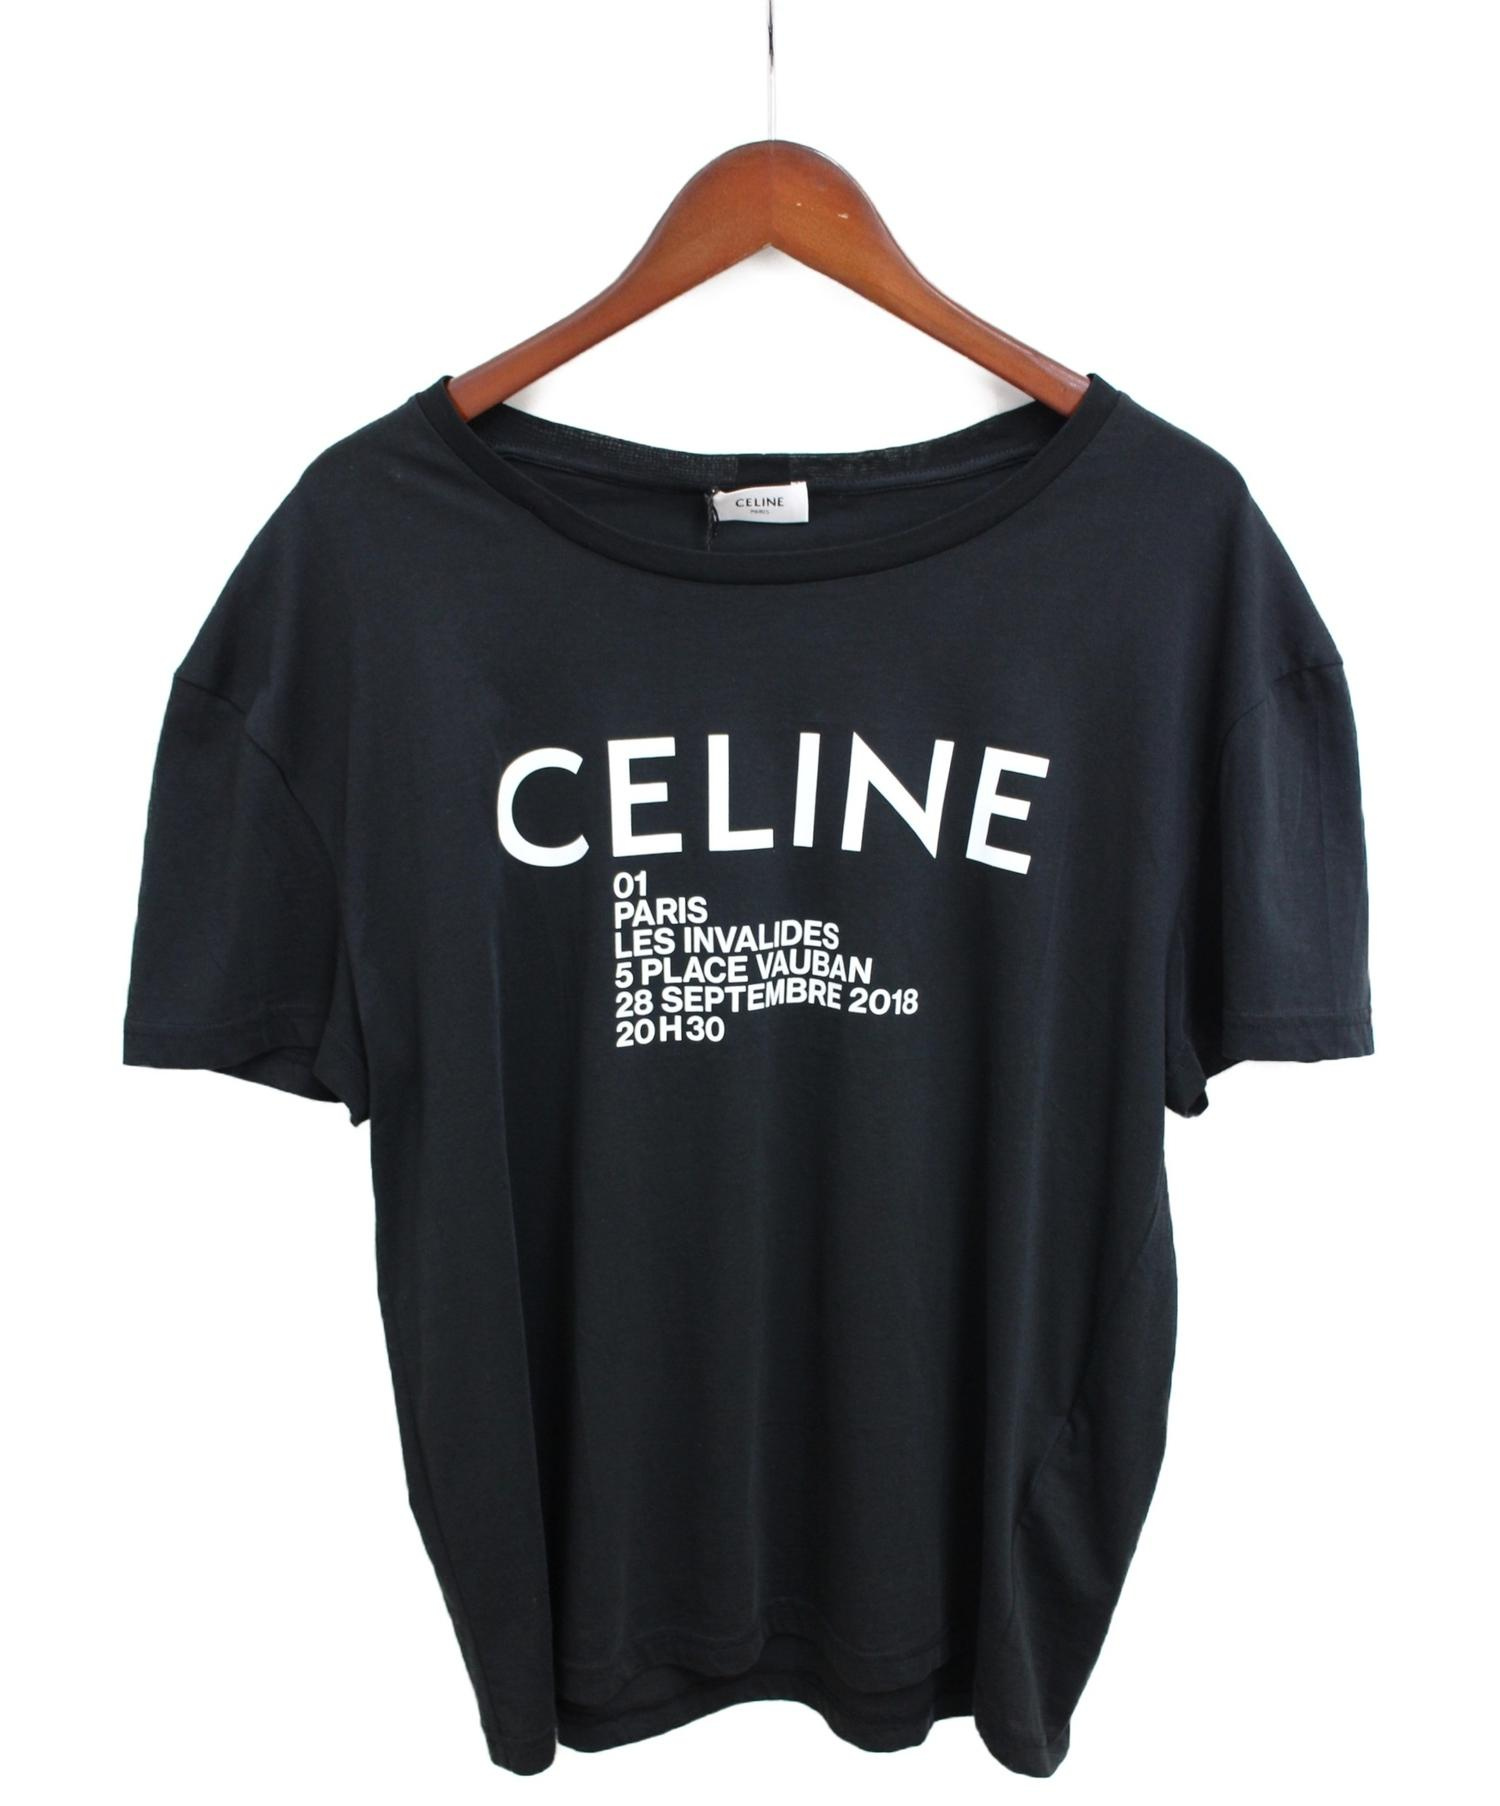 CELINE セリーヌ Tシャツ www.cetraslp.gob.mx